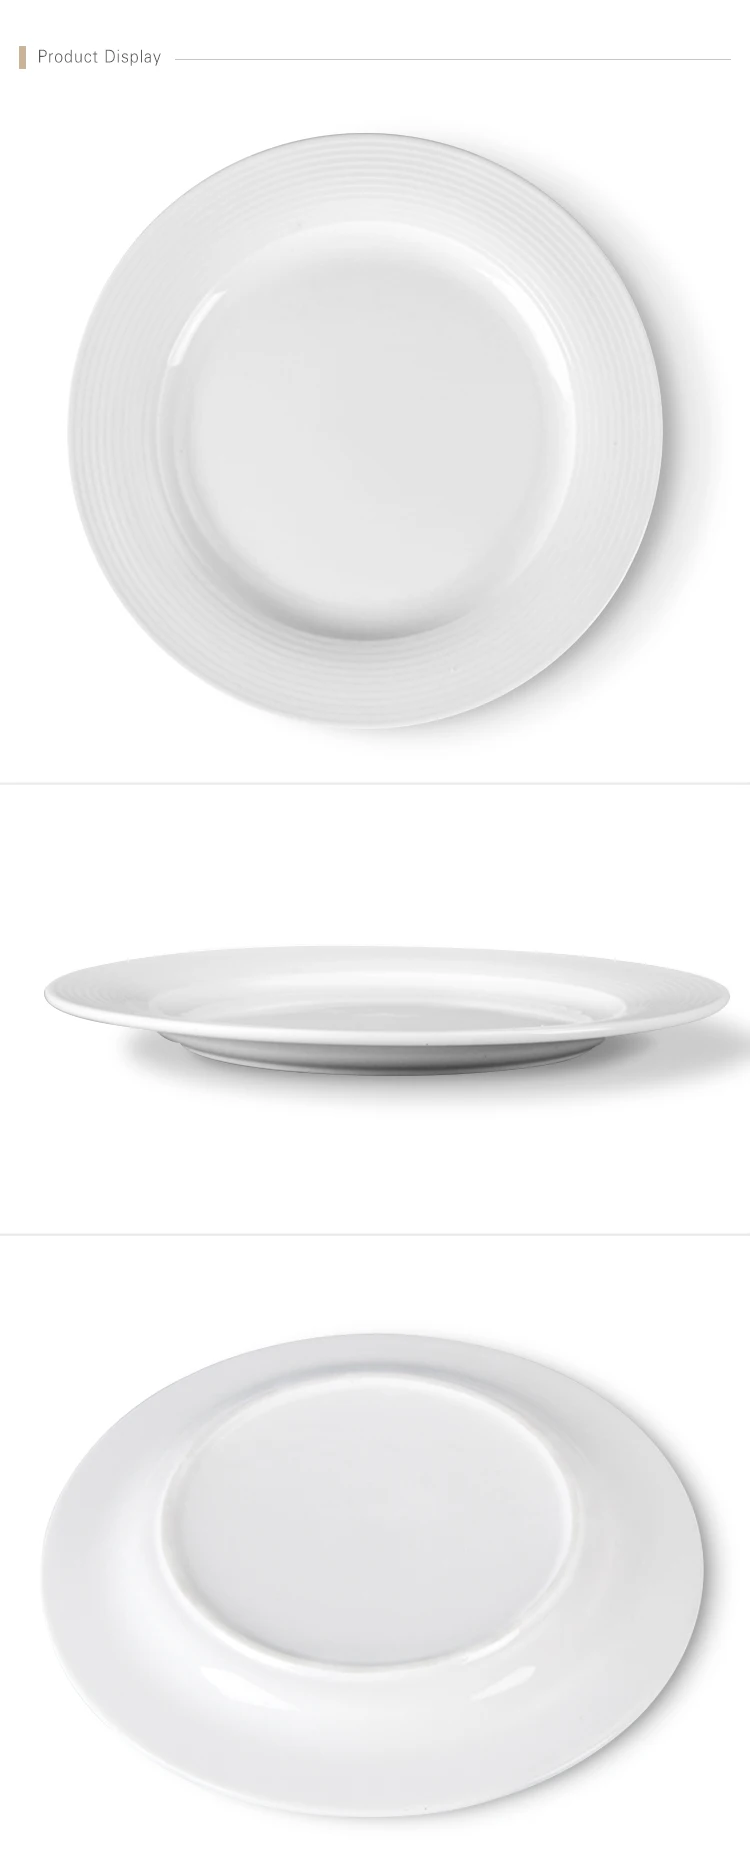 Best Selling Products Crockery Plates Sets Dinnerware Ceramic, Luxurious Durable Club Dinner Plates Ceramic Restaurant%